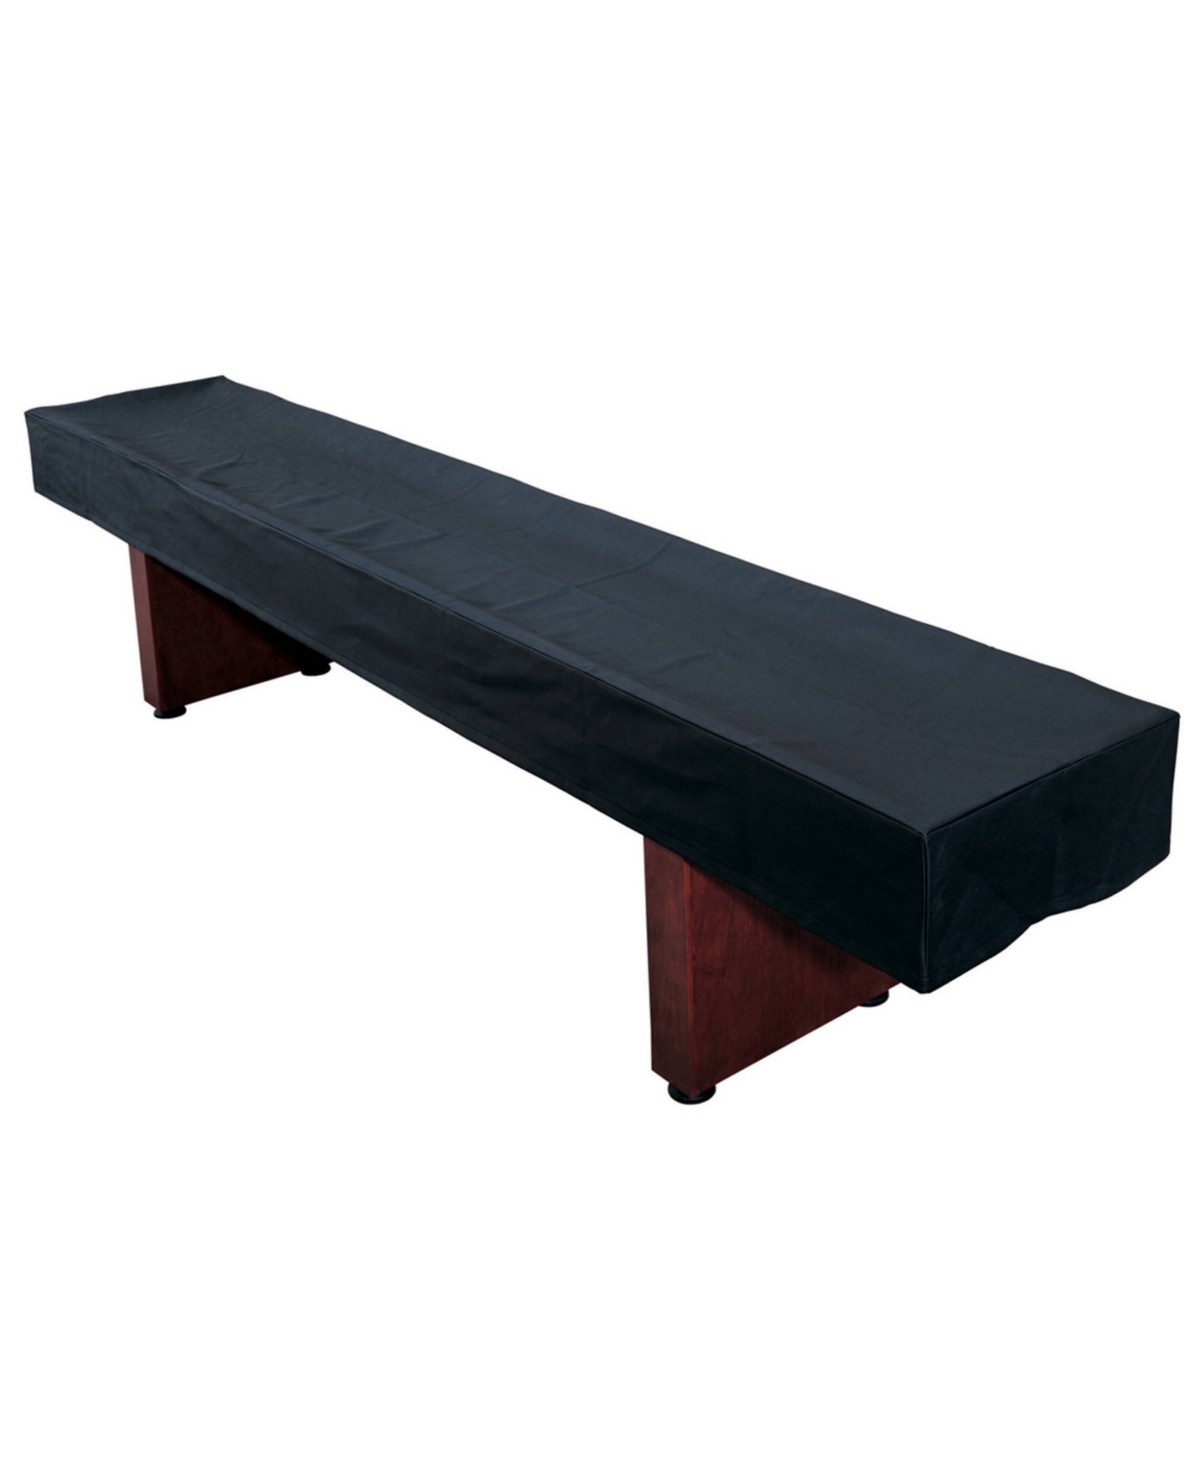 12' Shuffleboard Table Cover - Black